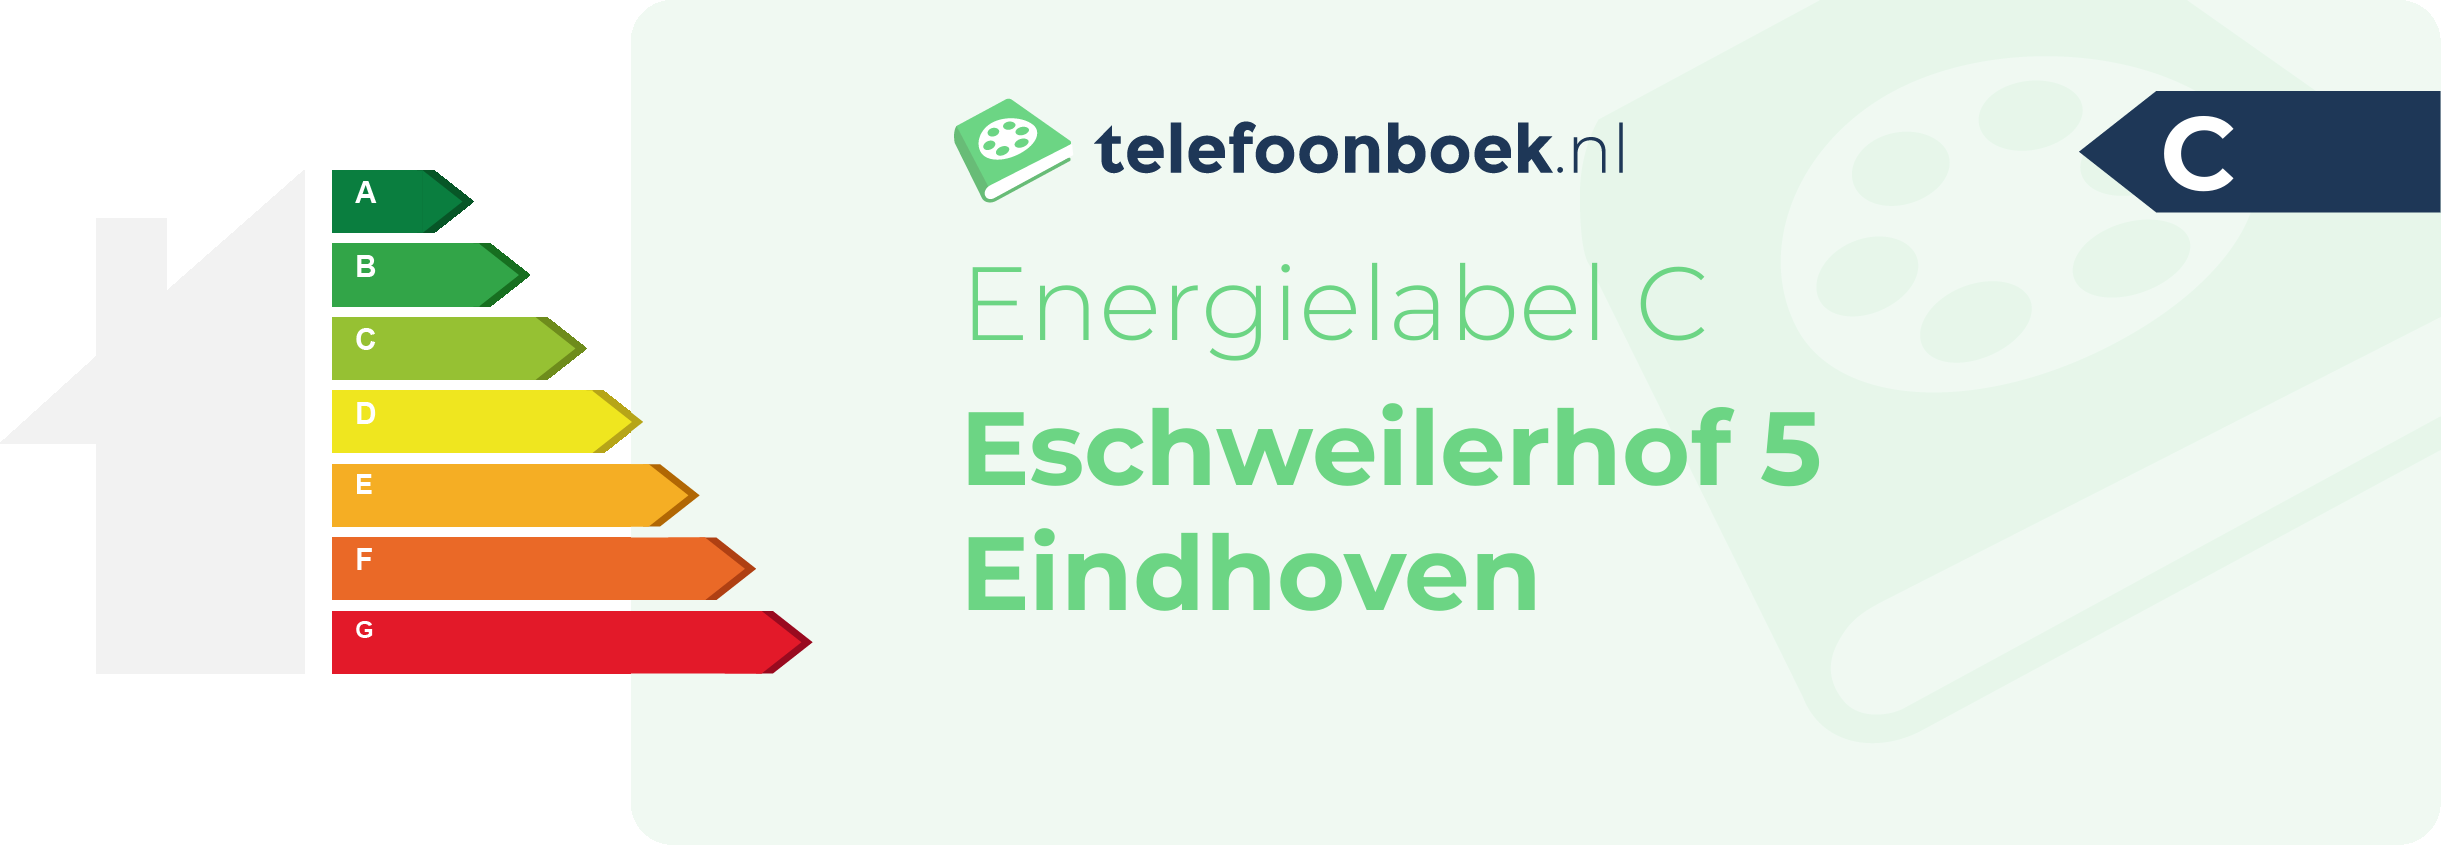 Energielabel Eschweilerhof 5 Eindhoven